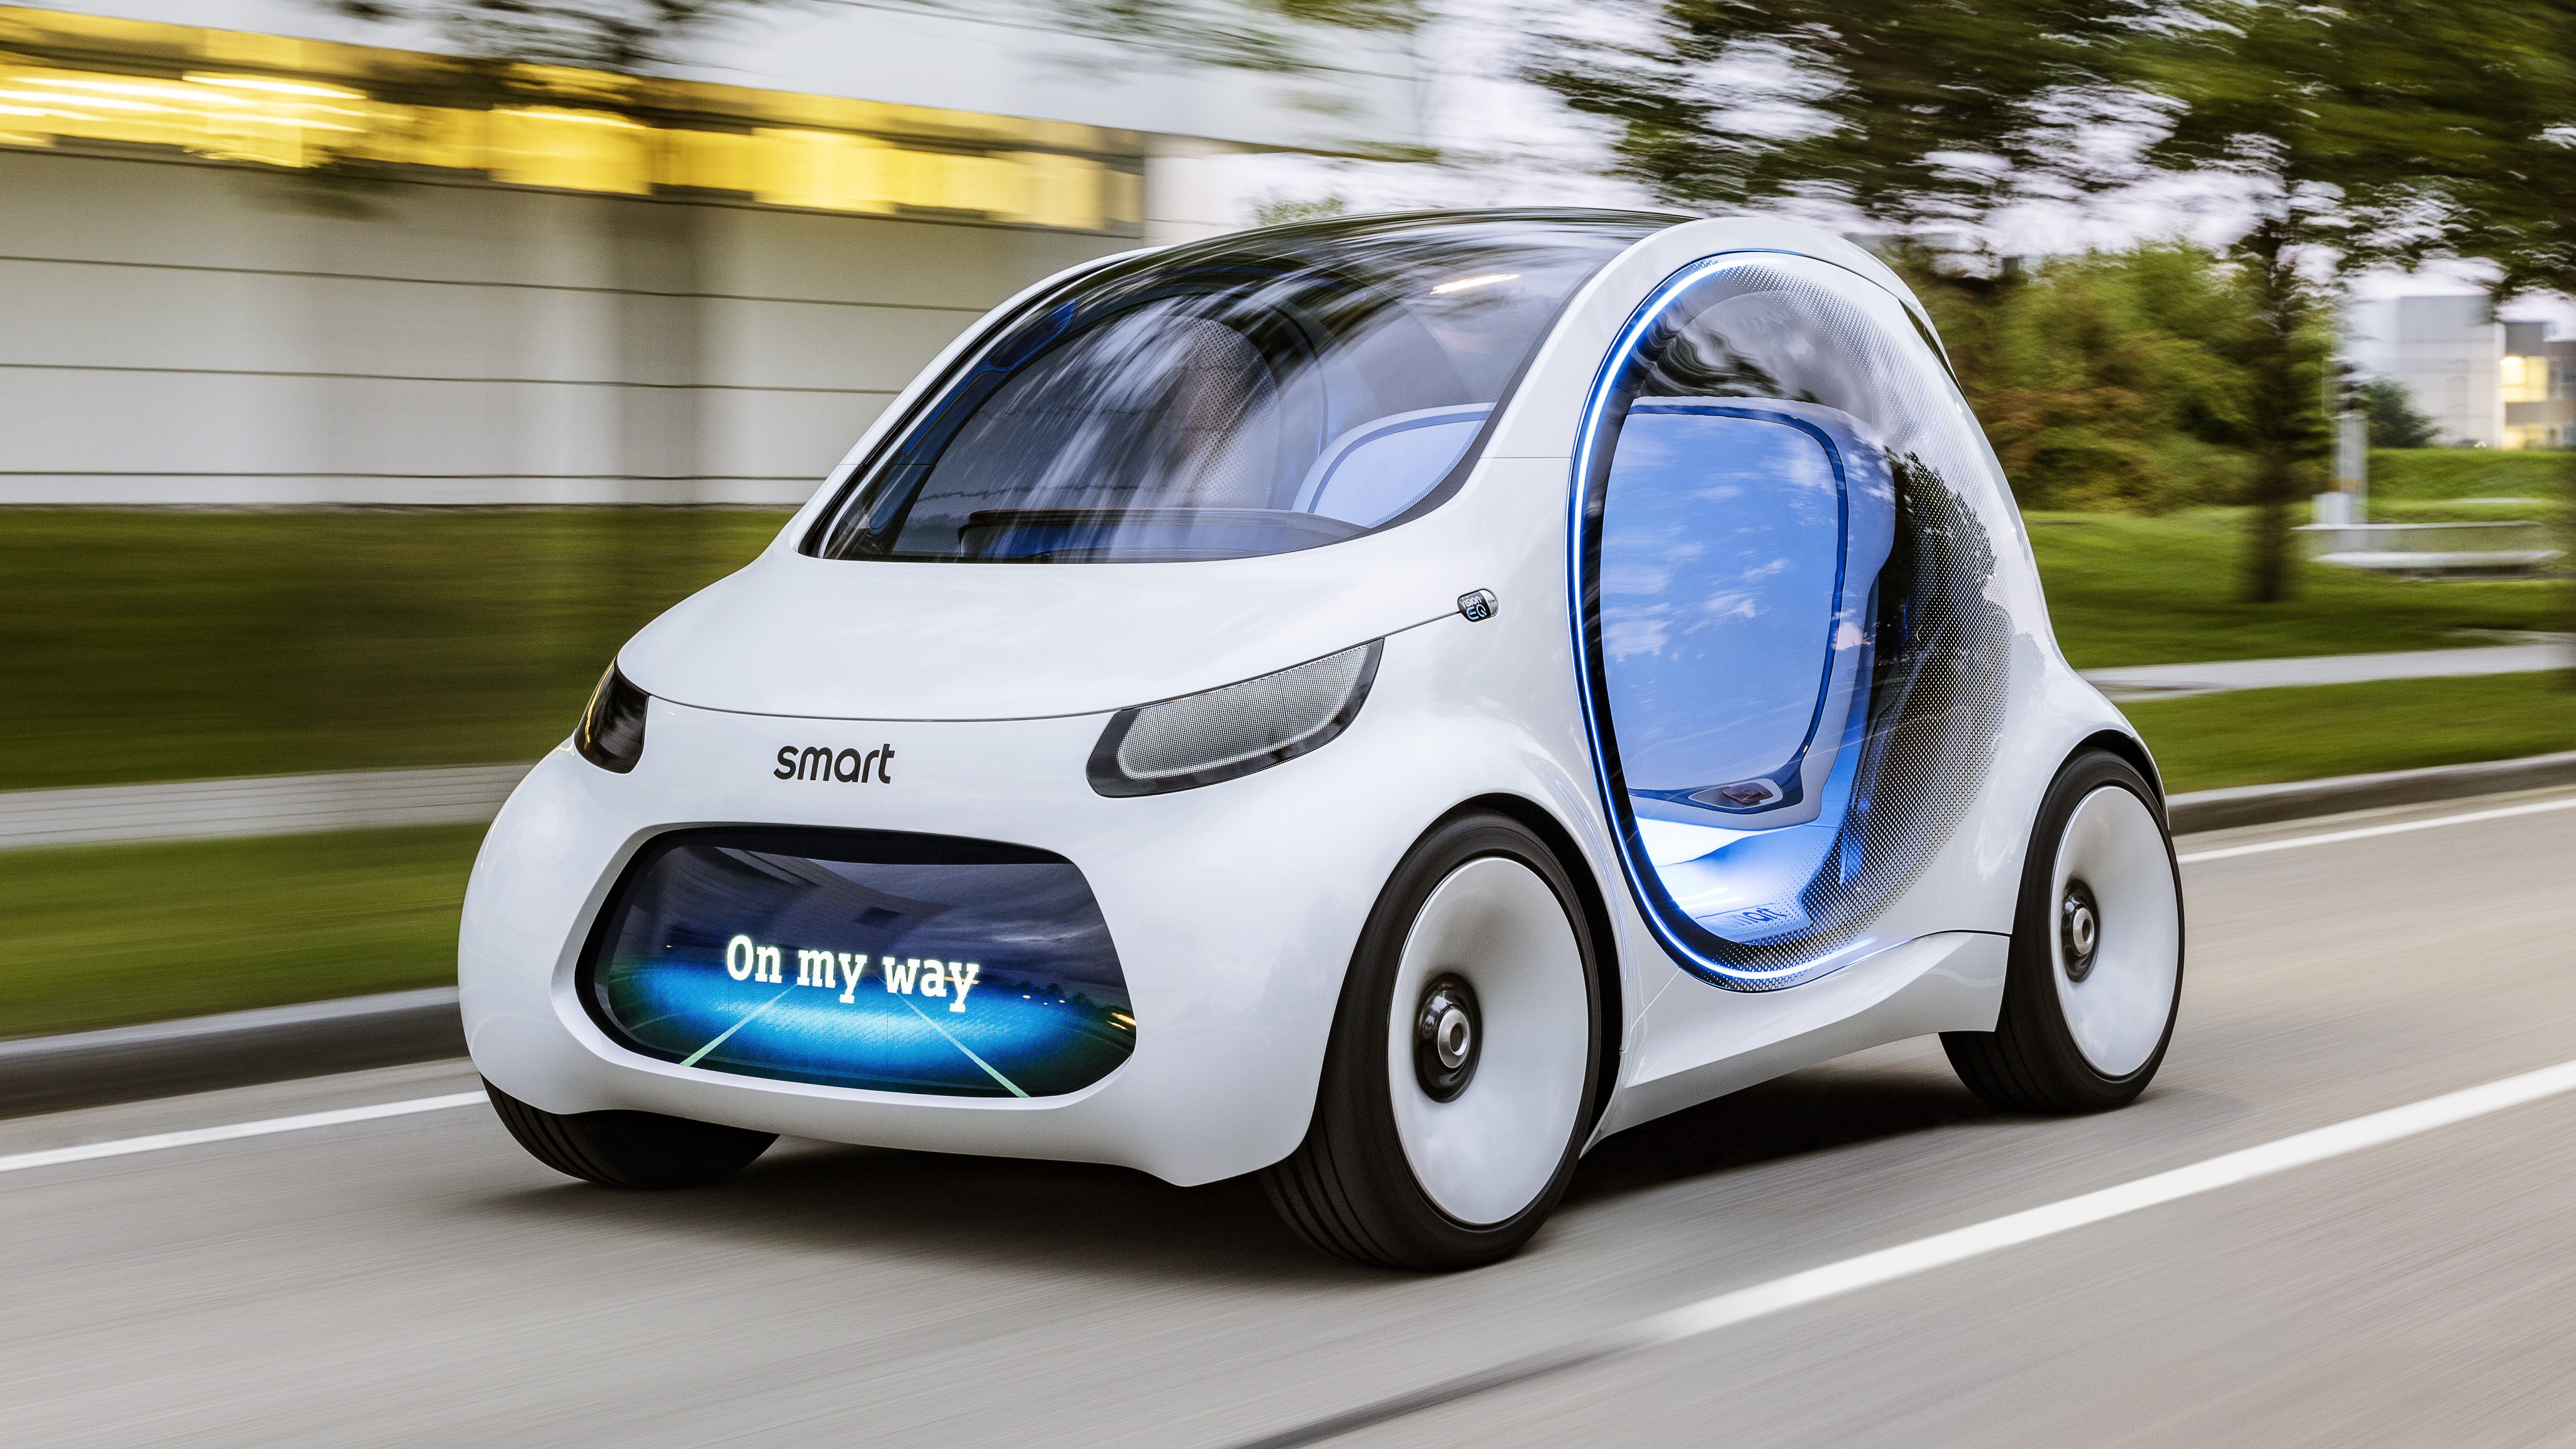 Smart has built a self-driving, car-sharing concept | Top Gear